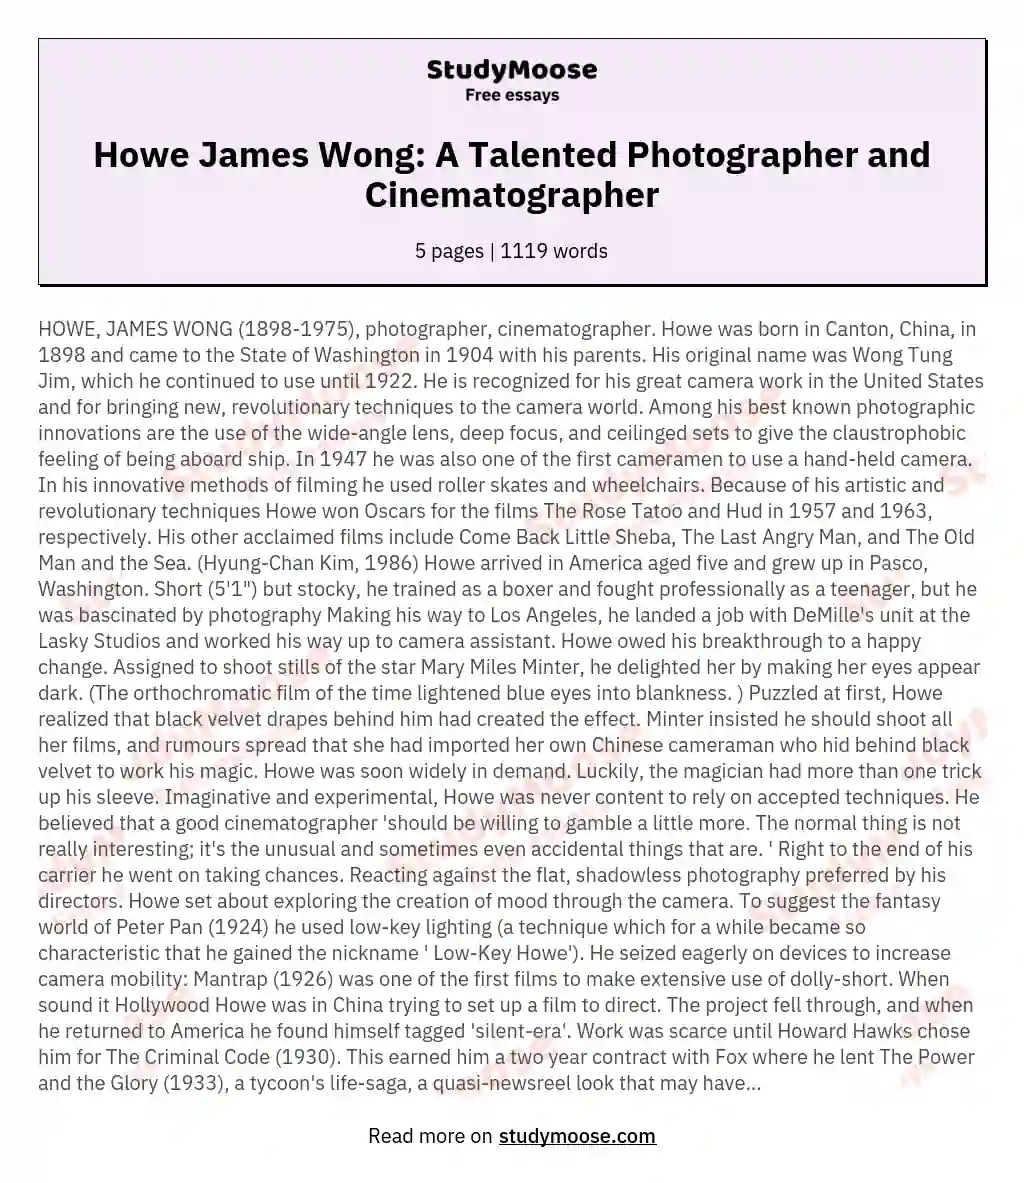 James Wong Howe